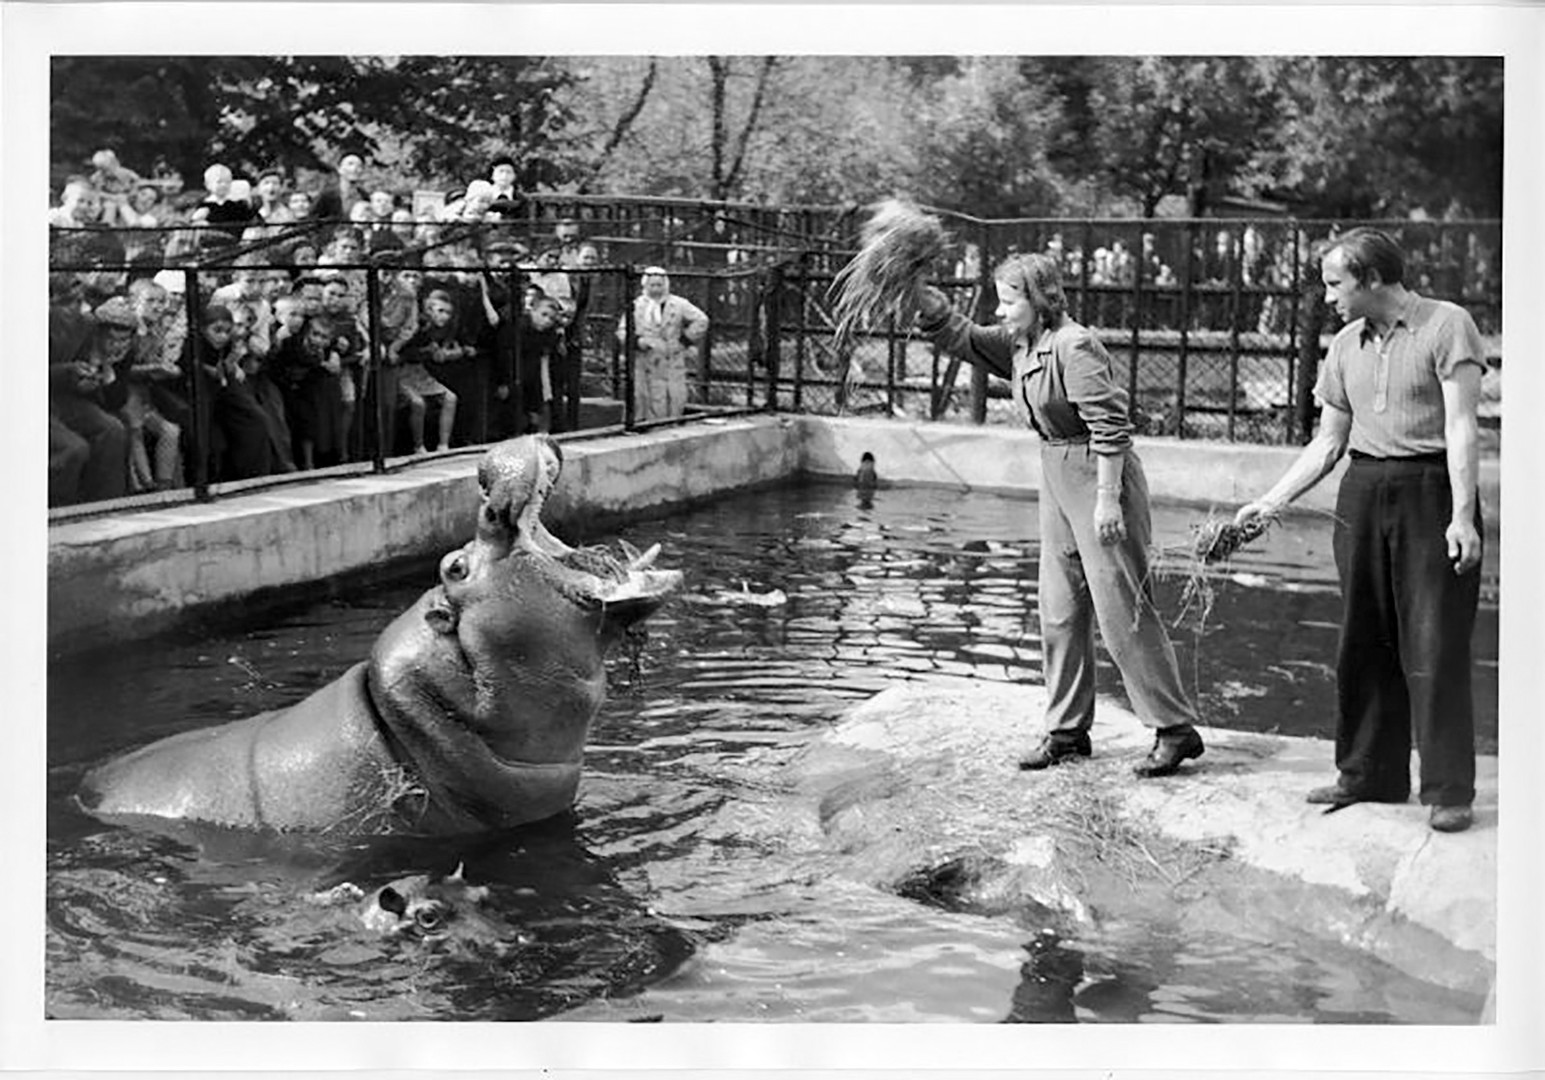 Фото из ленинградского зоопарка